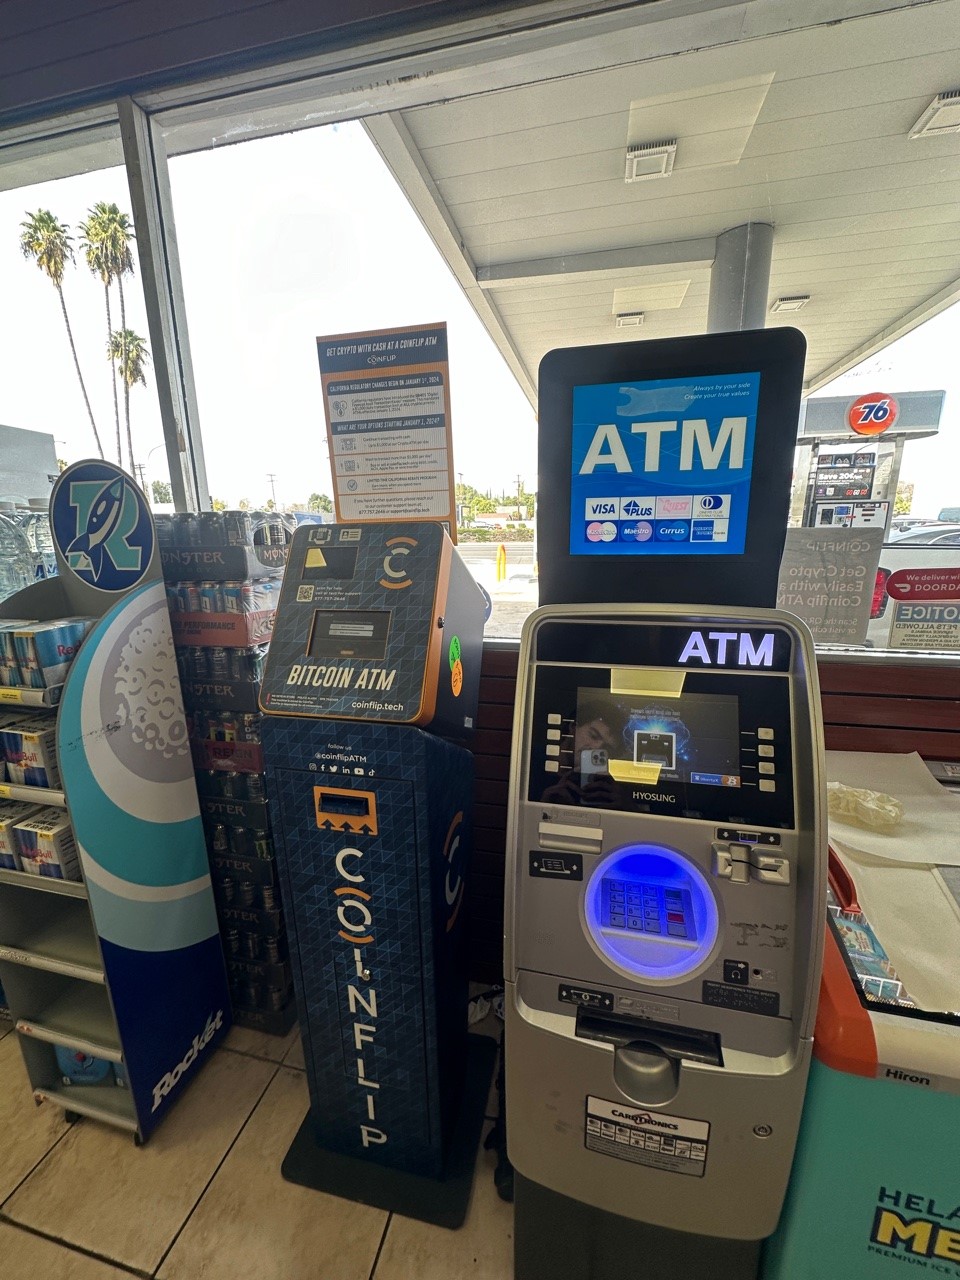 CoinFlip Bitcoin ATM Reseda (773)800-0106